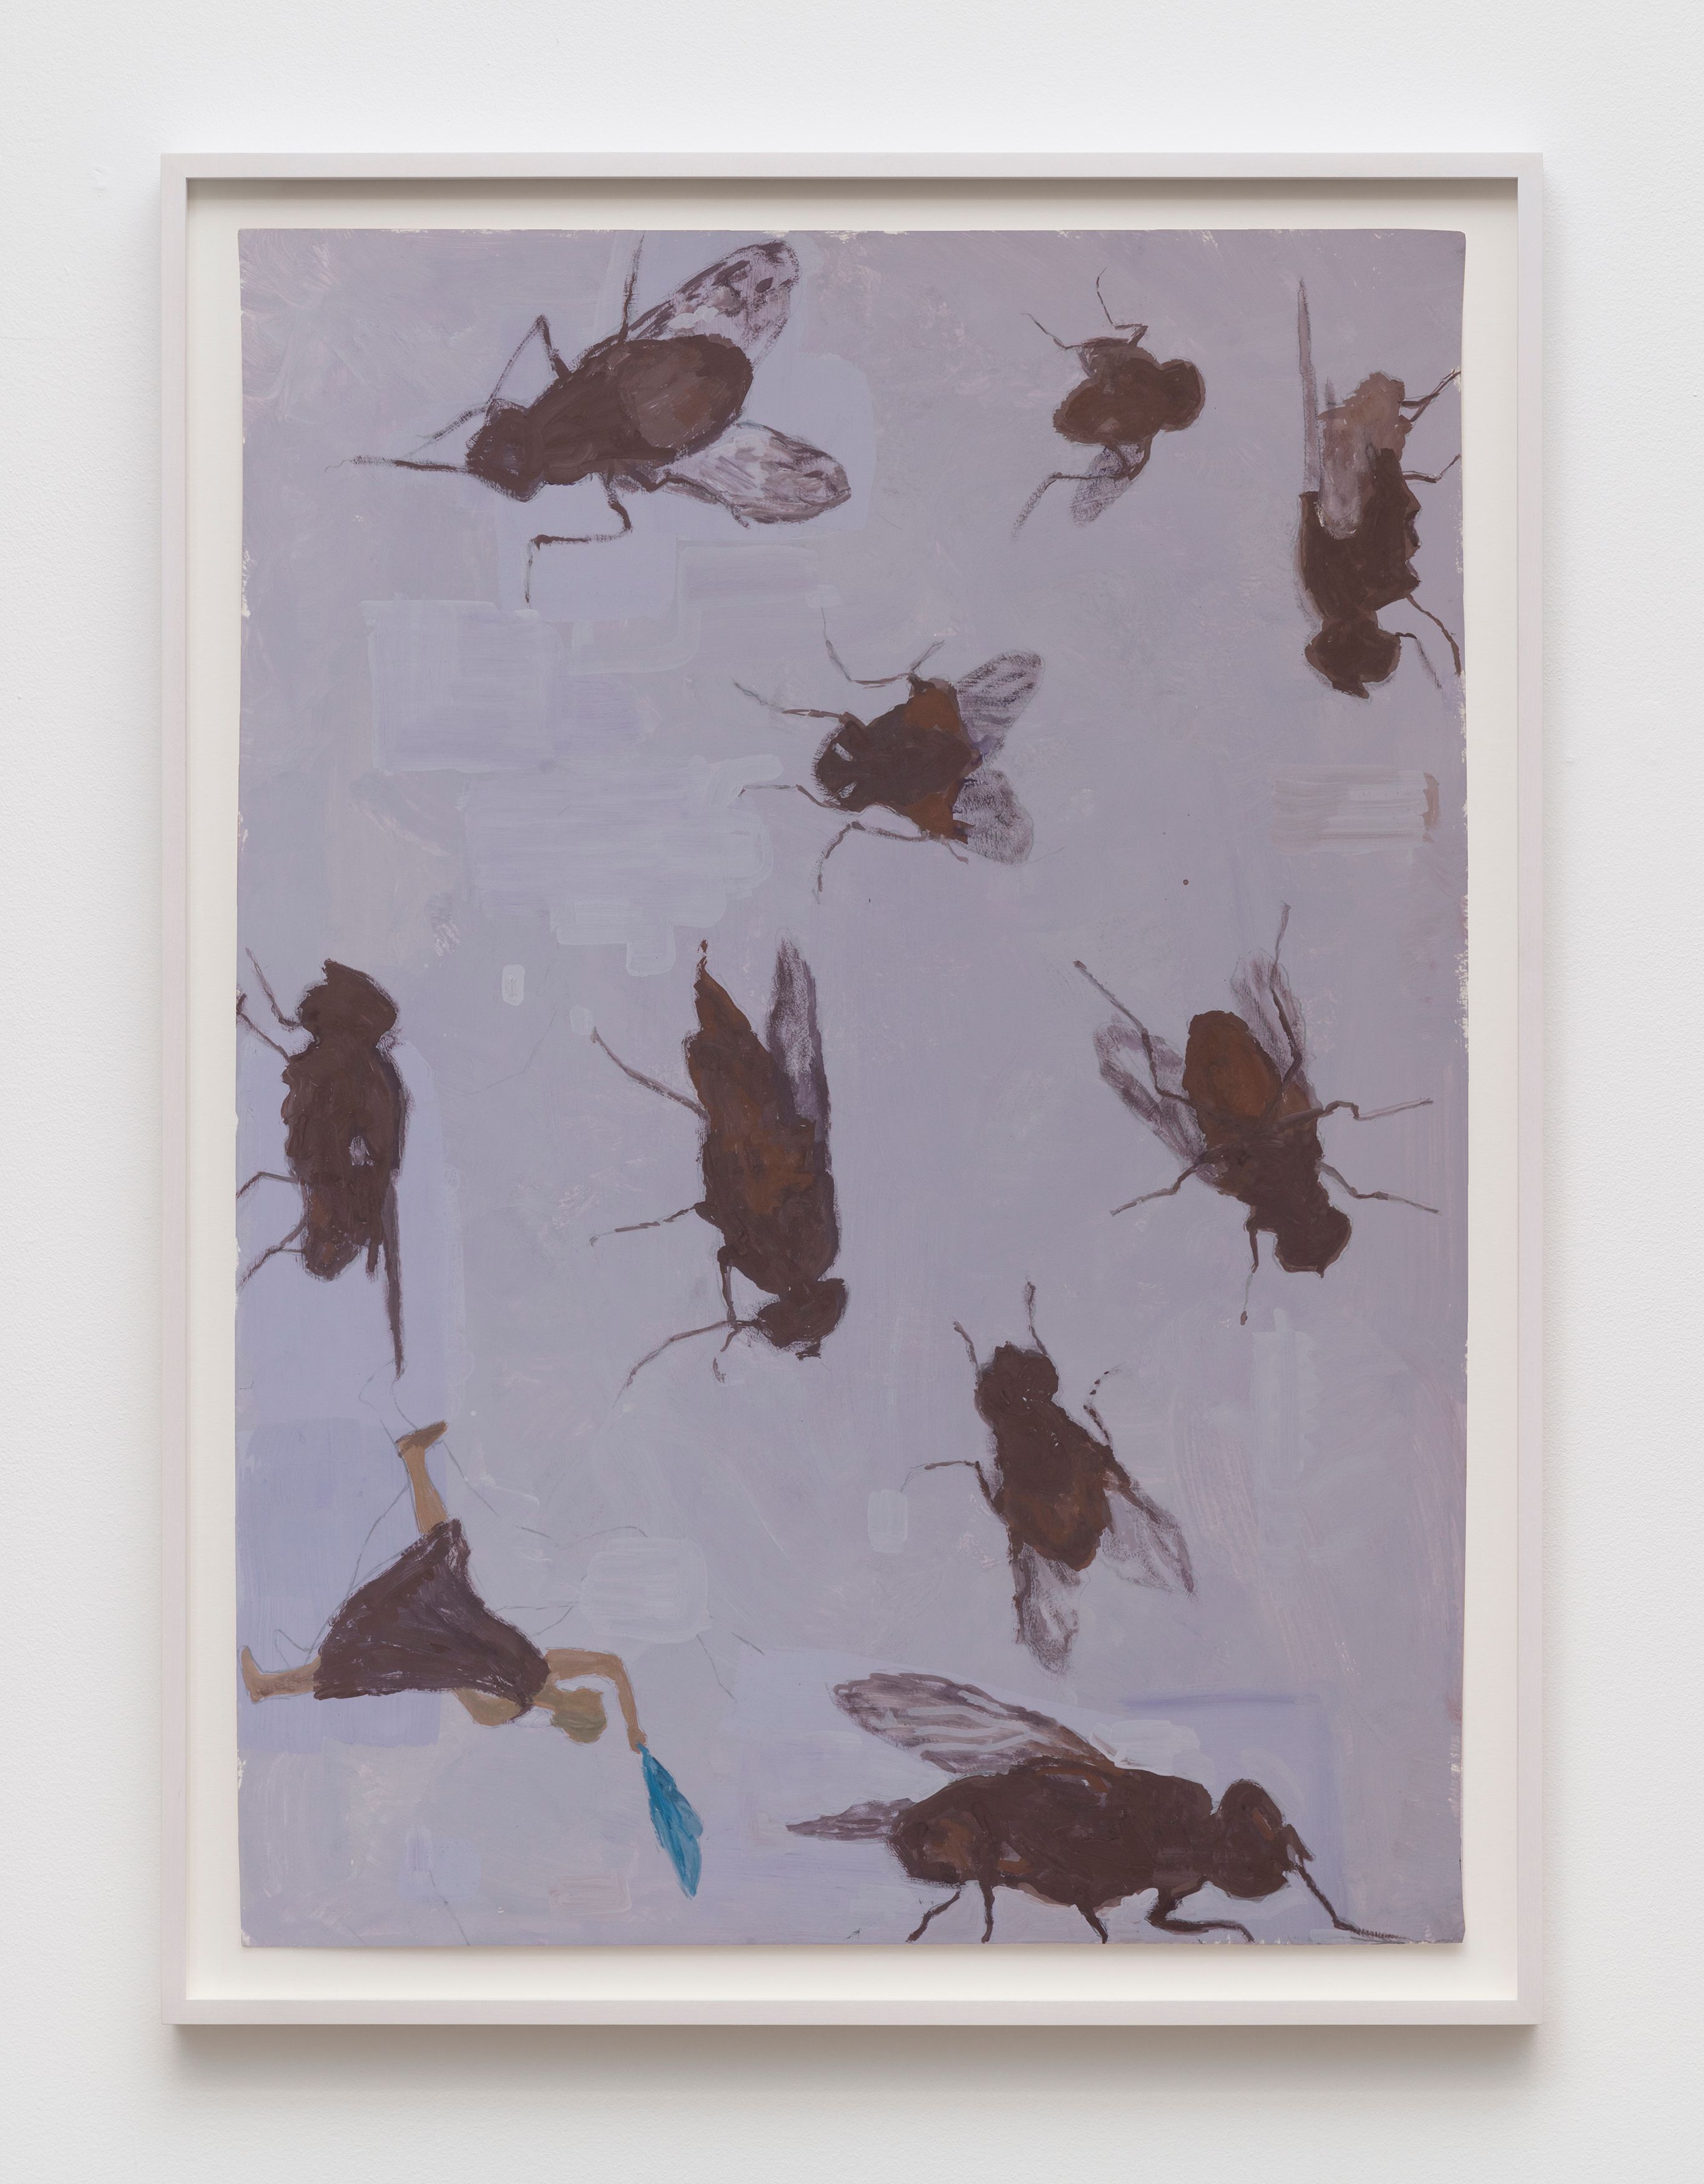 Olga Chernysheva, Flies, 2020, gouache on paper, 84 x 60 cm (33 x 23 5/8 in.) 